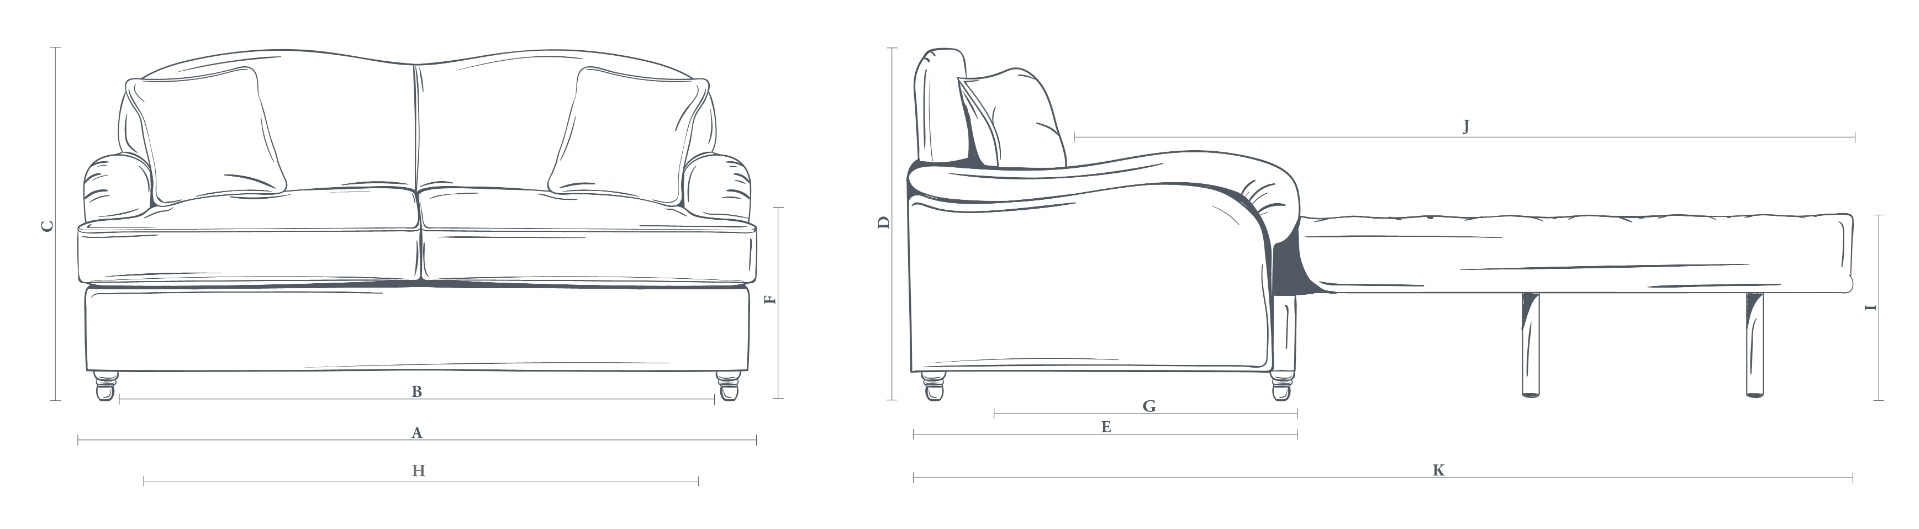 The Appledoe Sofa Bed 2 Seater